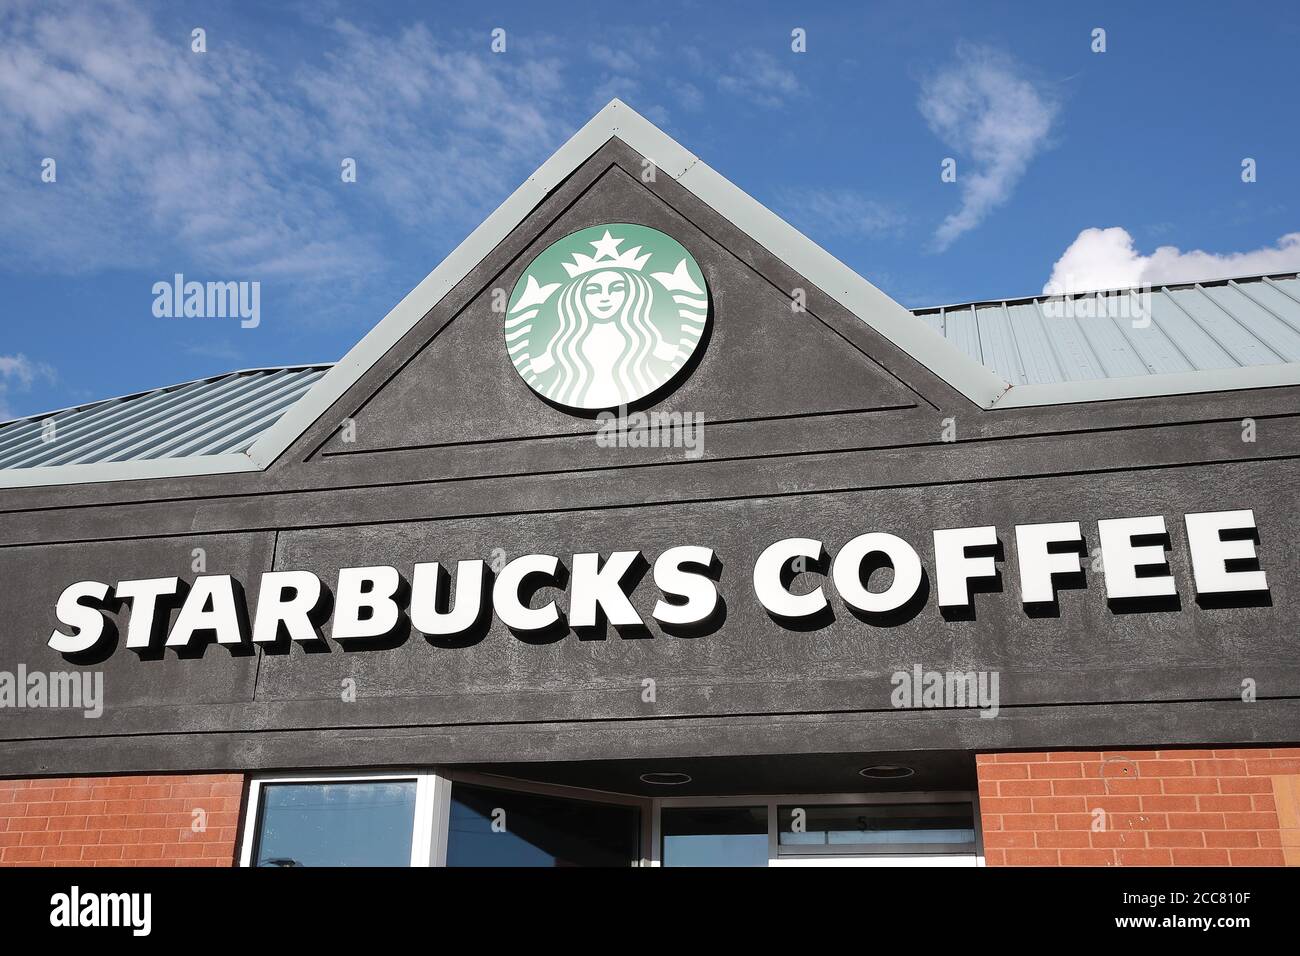 Starbucks Coffee Sign. London Ontario Canada Luke Durda/Alamy Stock Photo